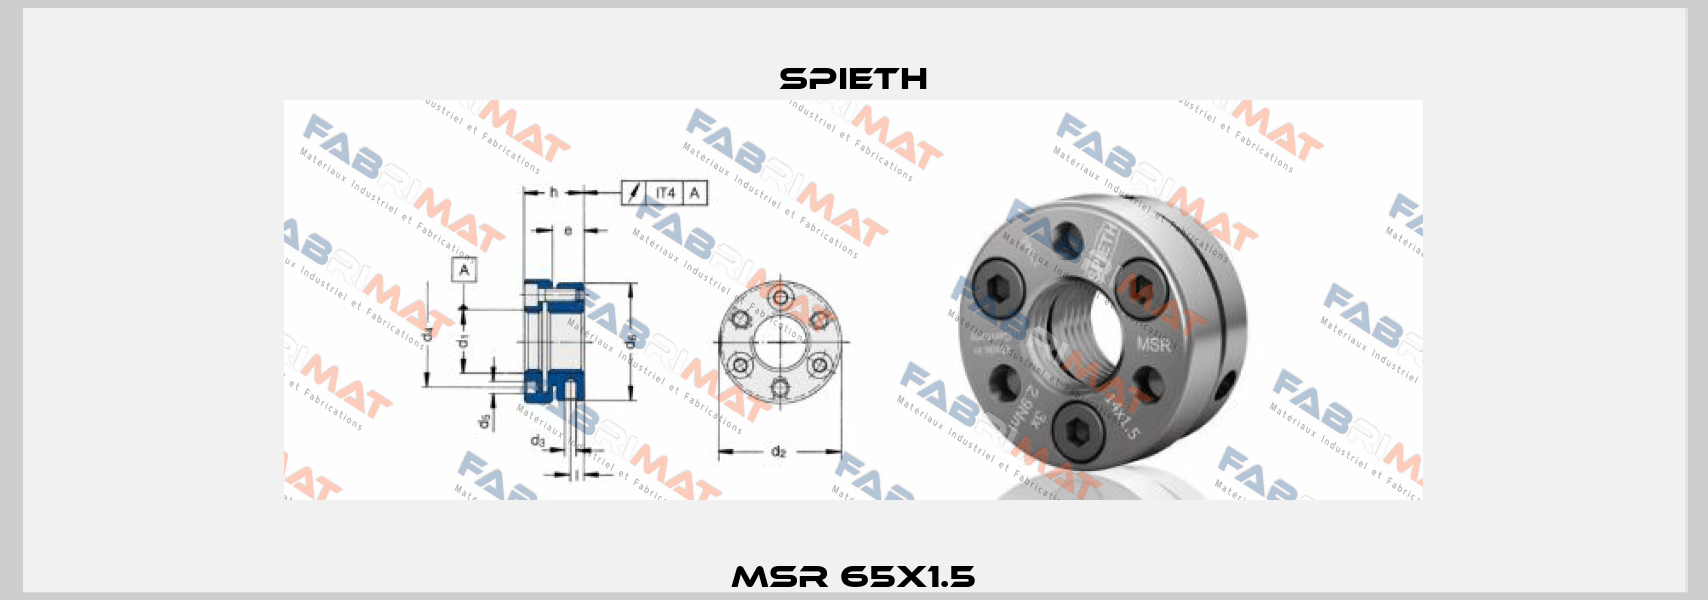 MSR 65x1.5 Spieth